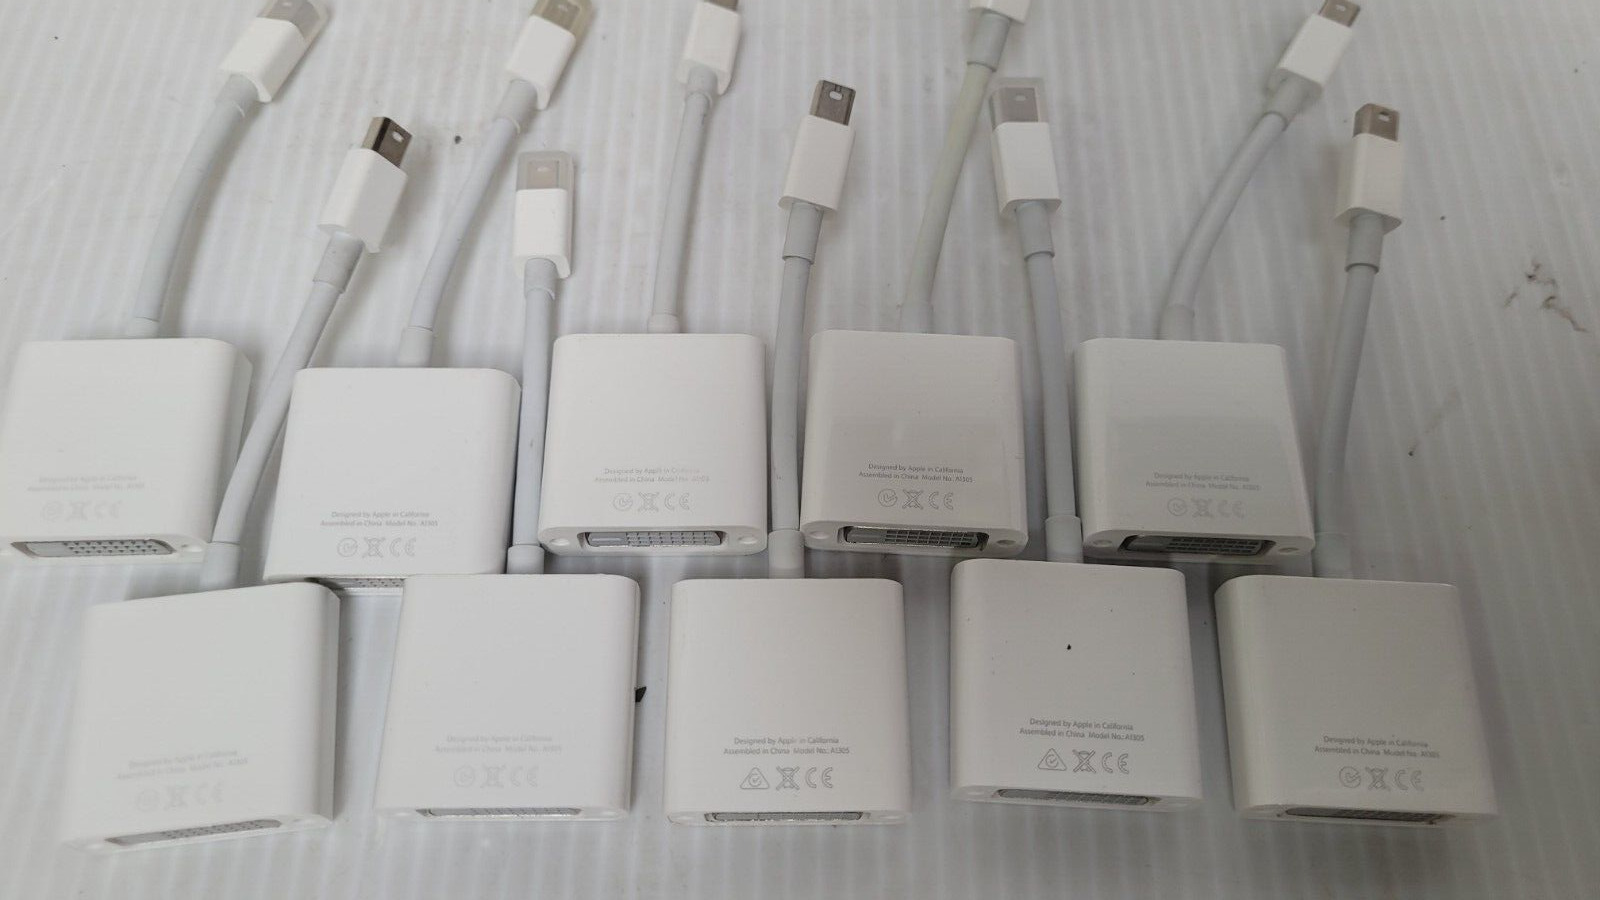 Lot of 10x Apple A1305 Thunderbolt Mini DisplayPort to DVI Adapter